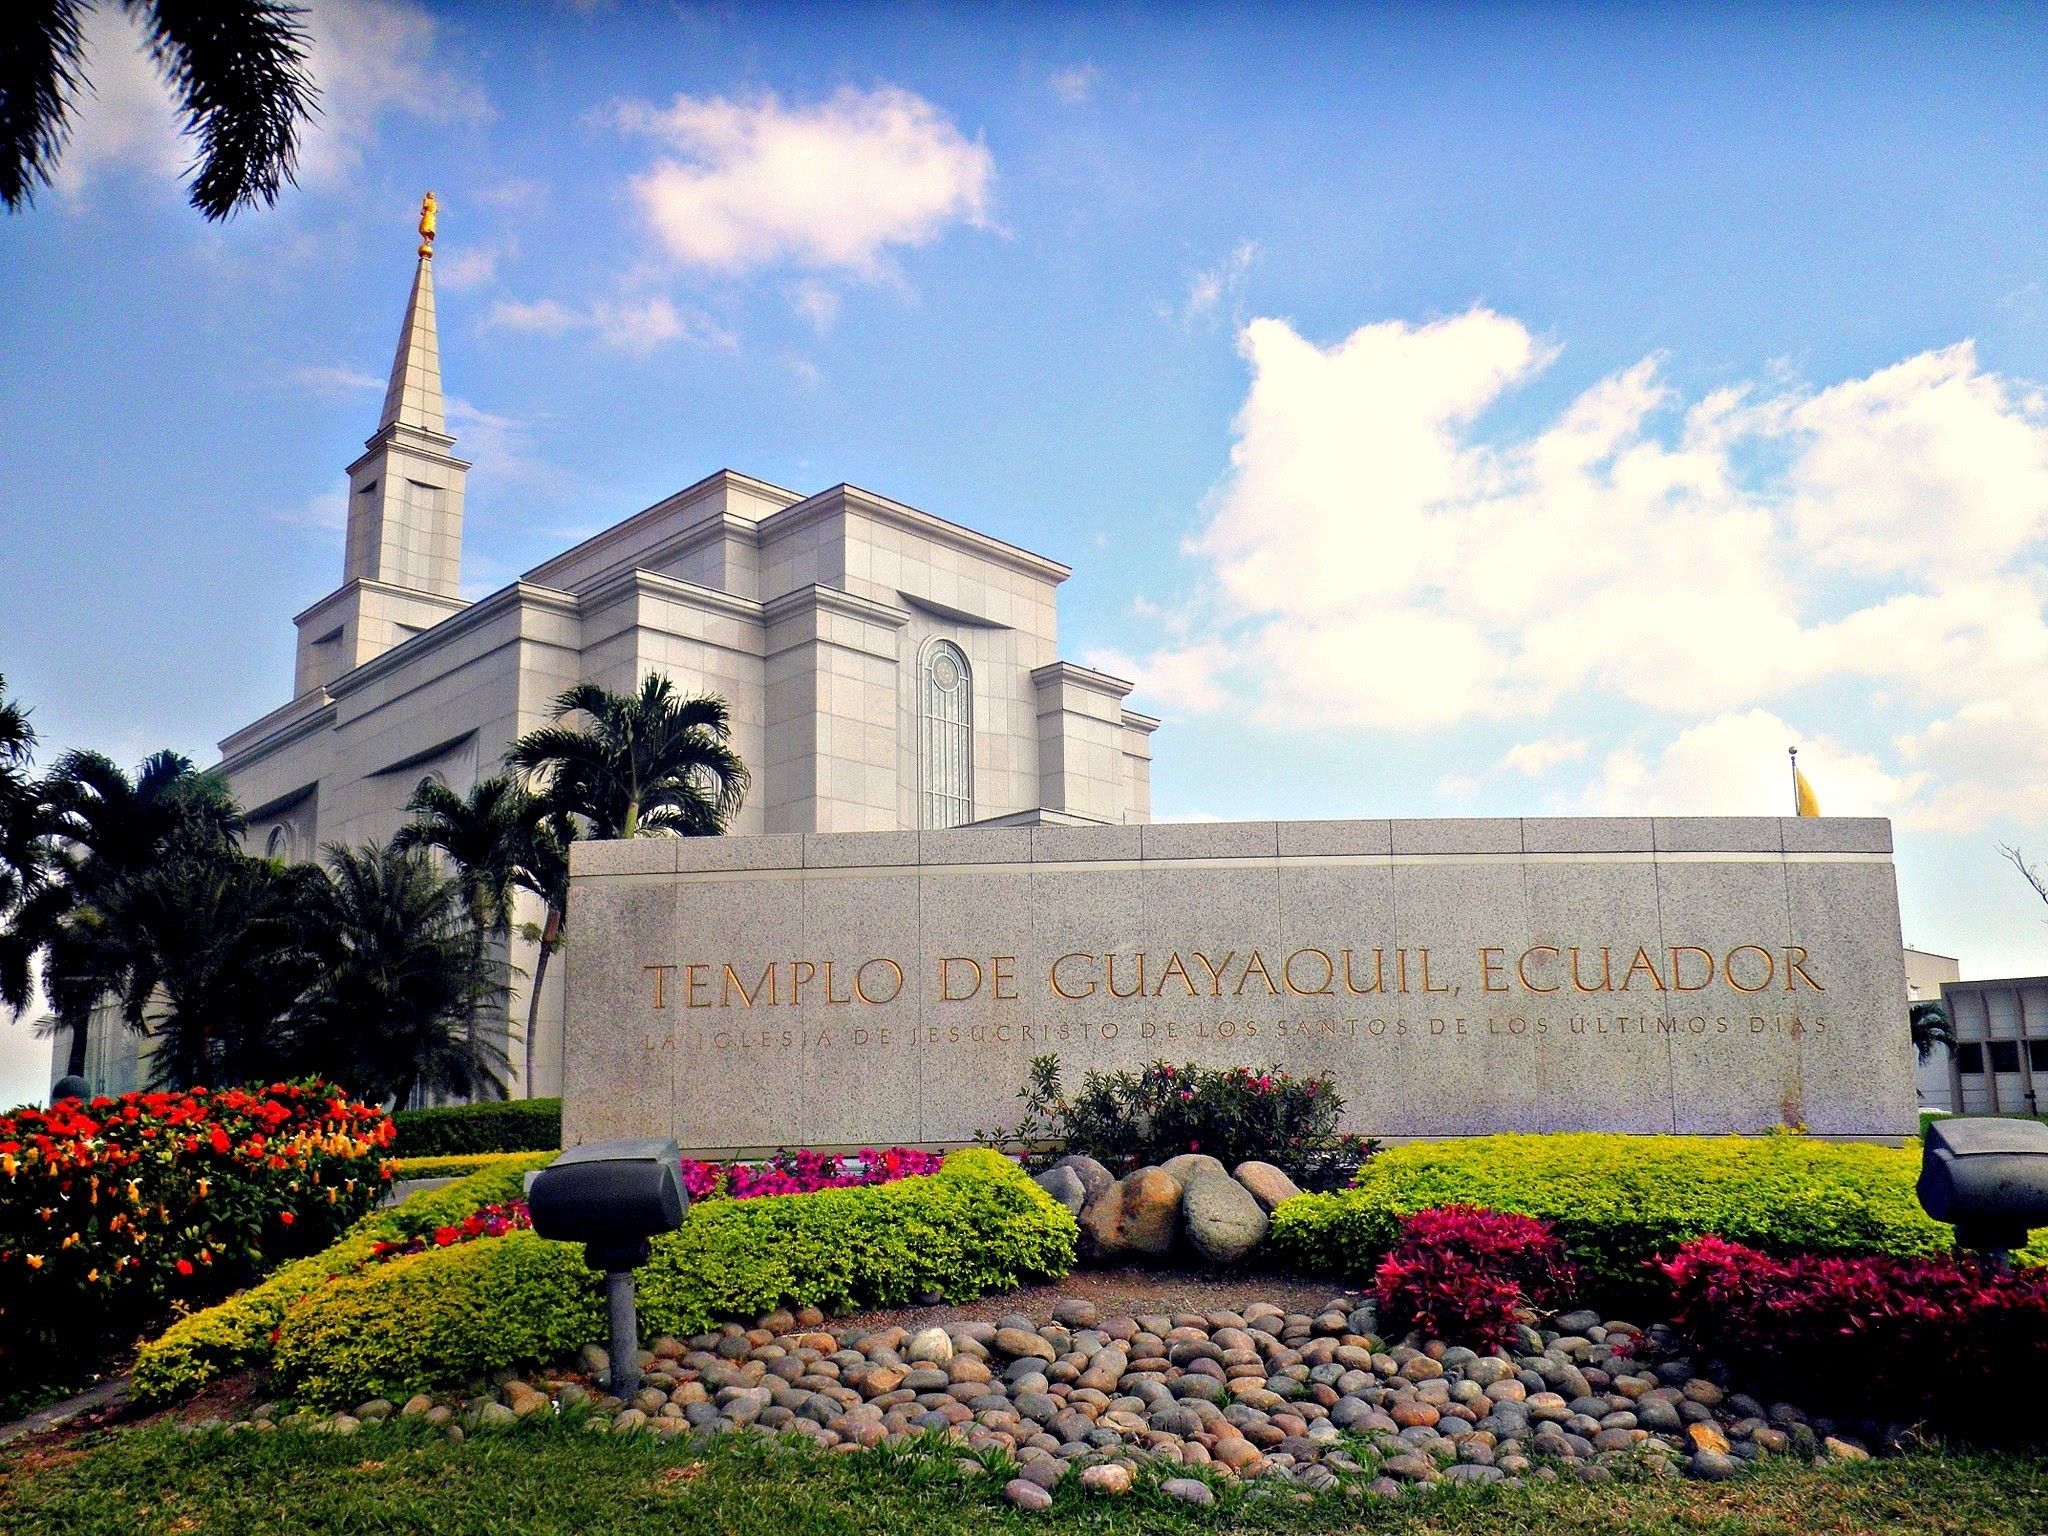 Guayaquil Ecuador Temple Sign